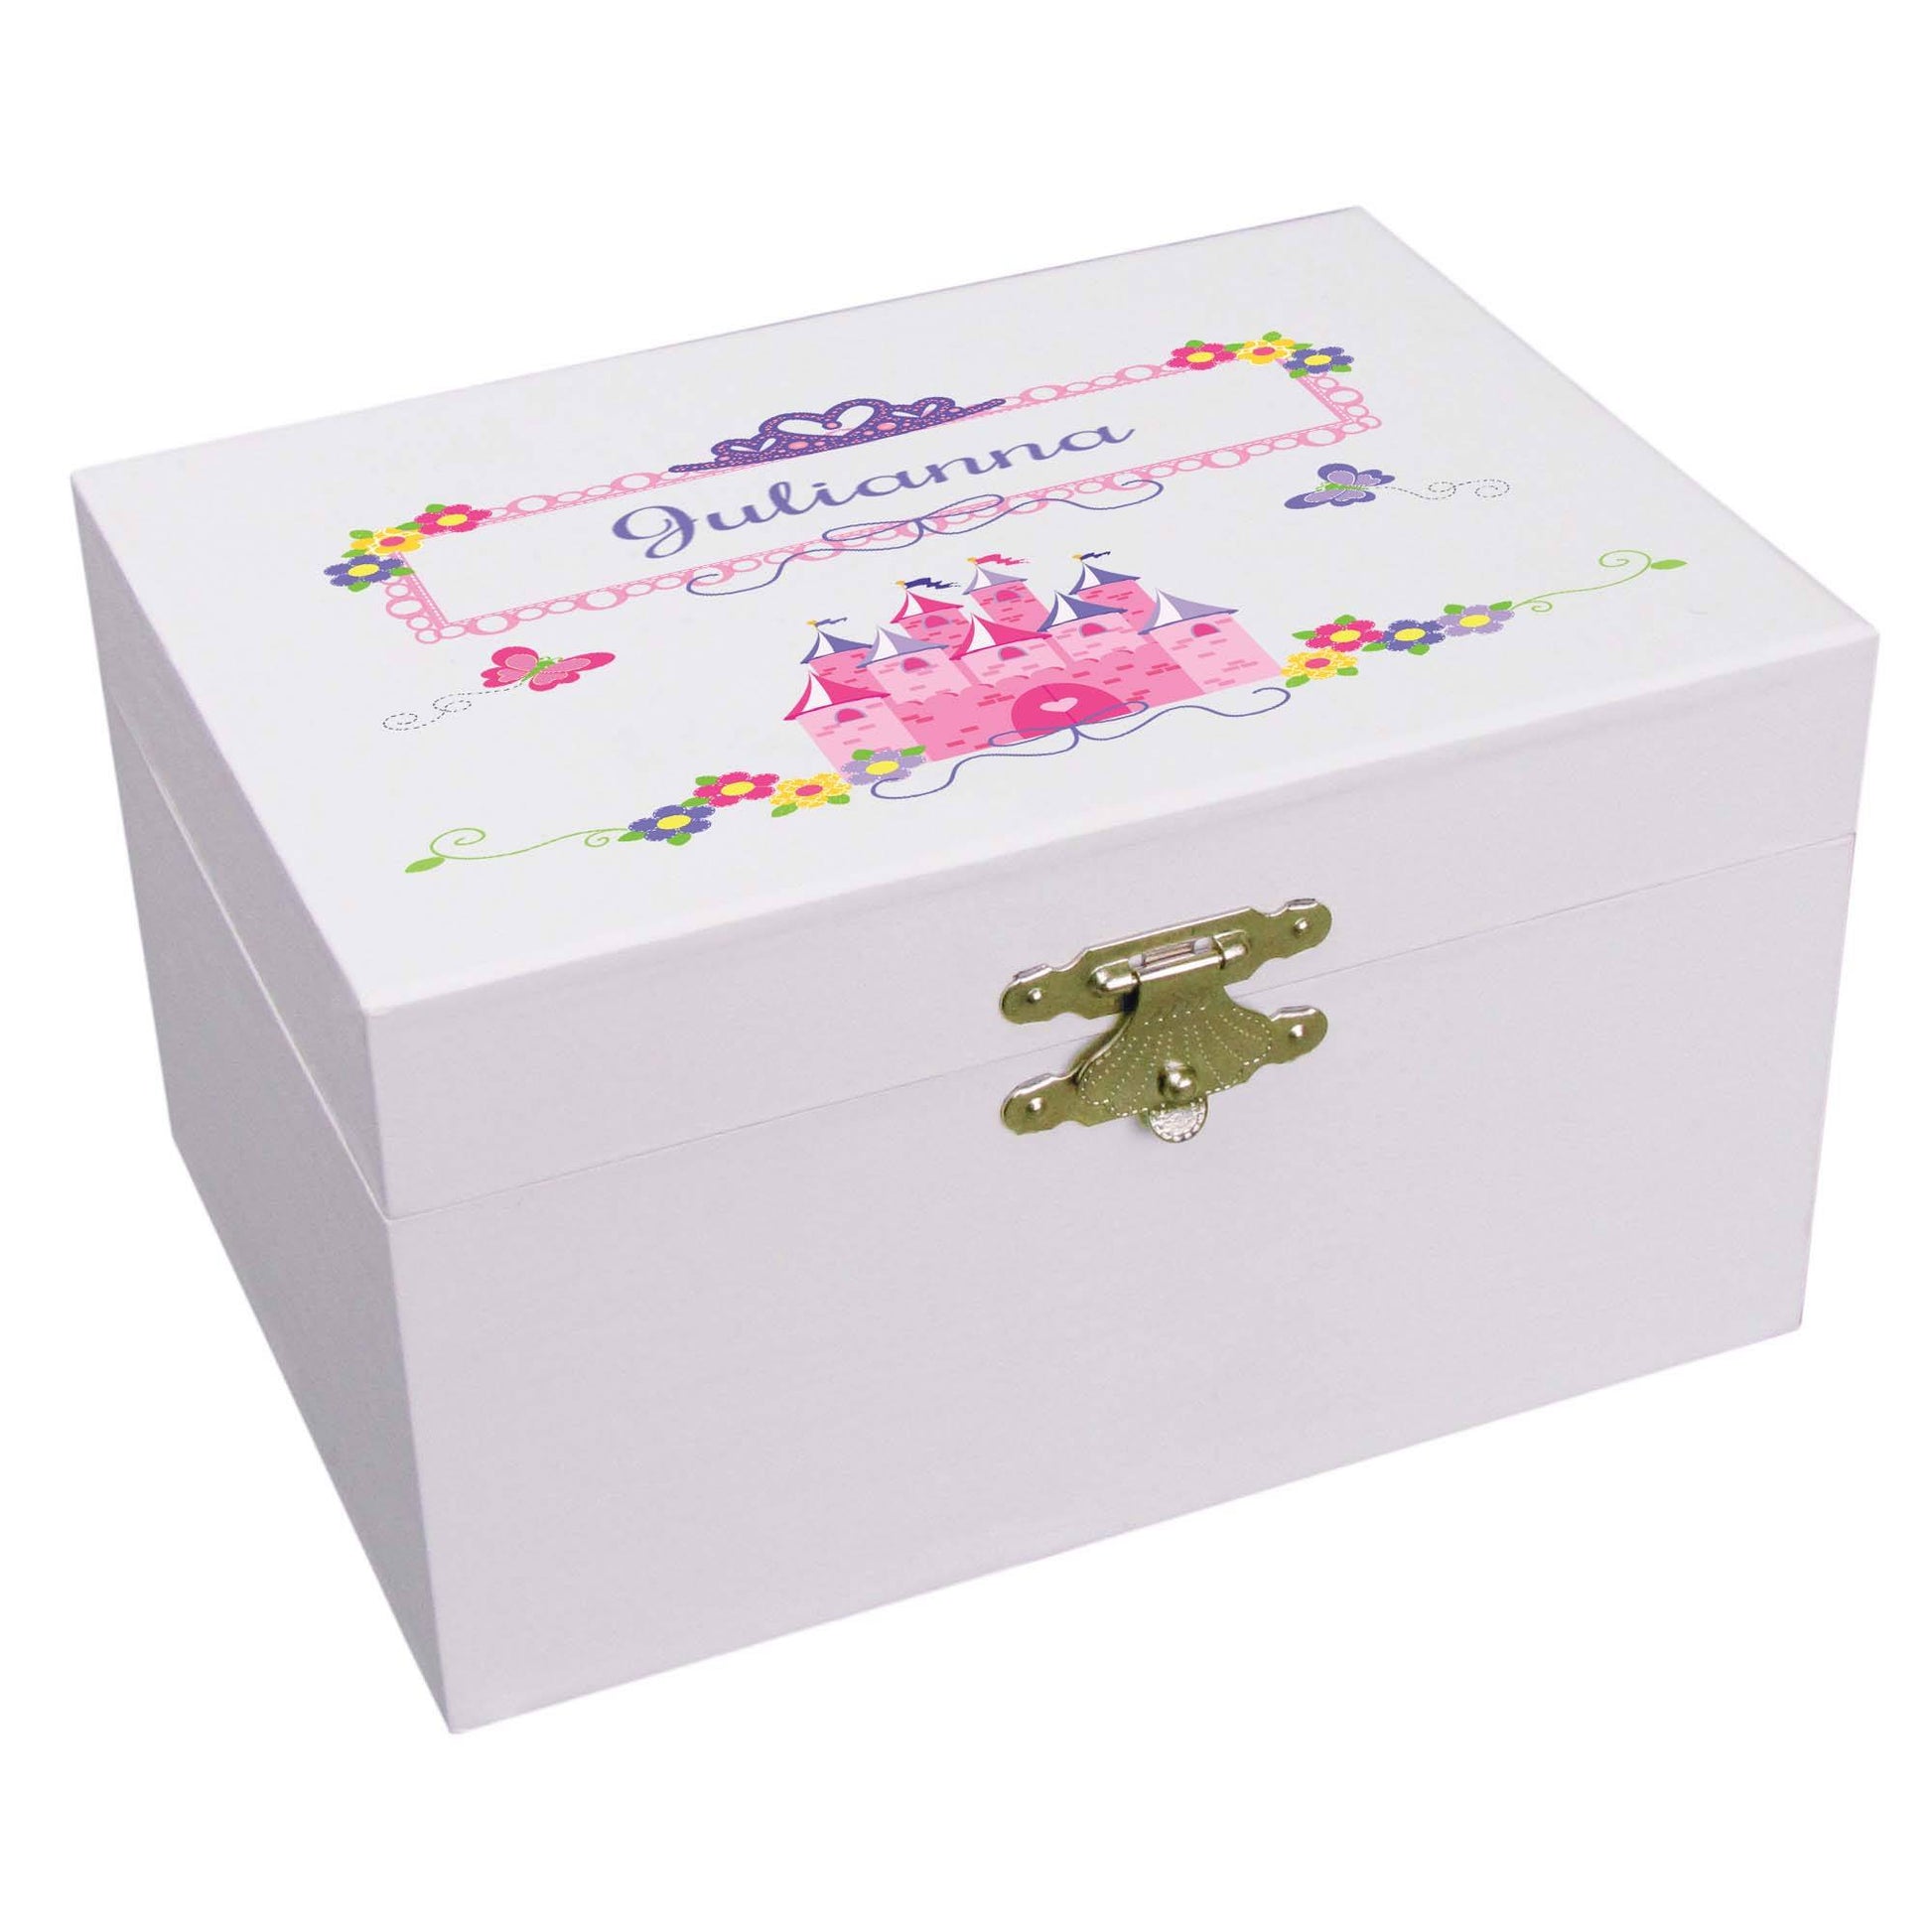 Personalized Ballerina Jewelry Box with Princess Castle design